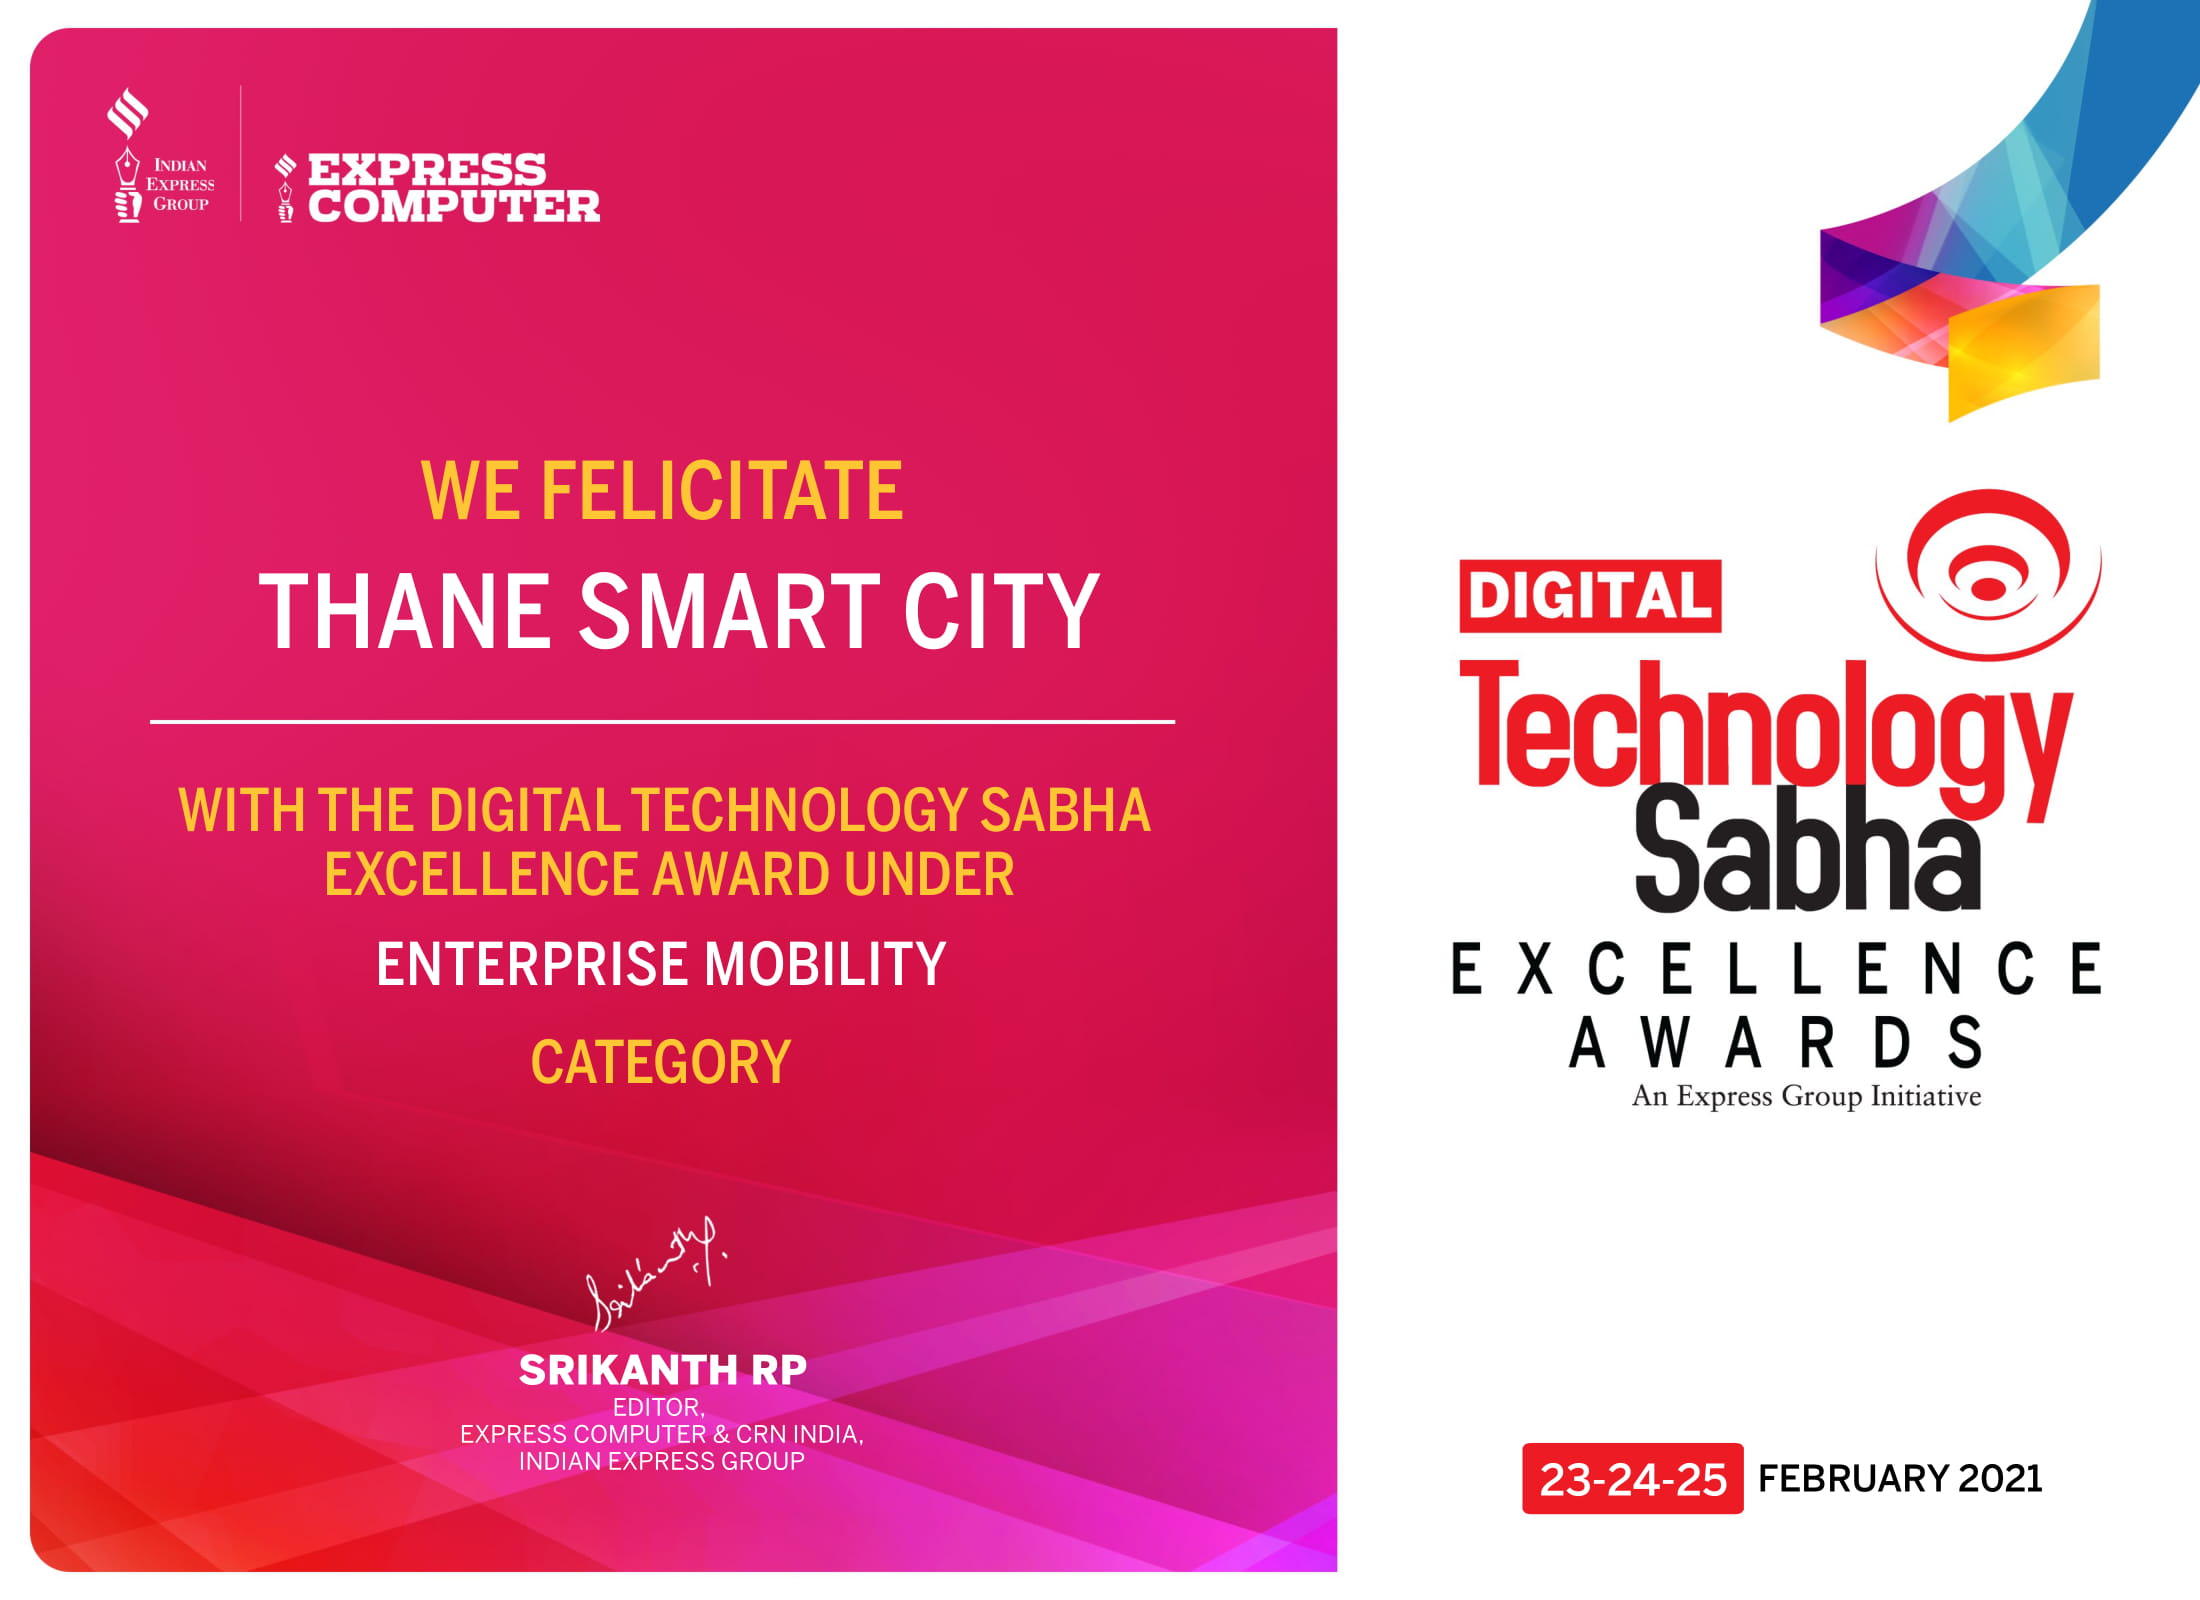 Digital Technology Sabha Excellence Awards